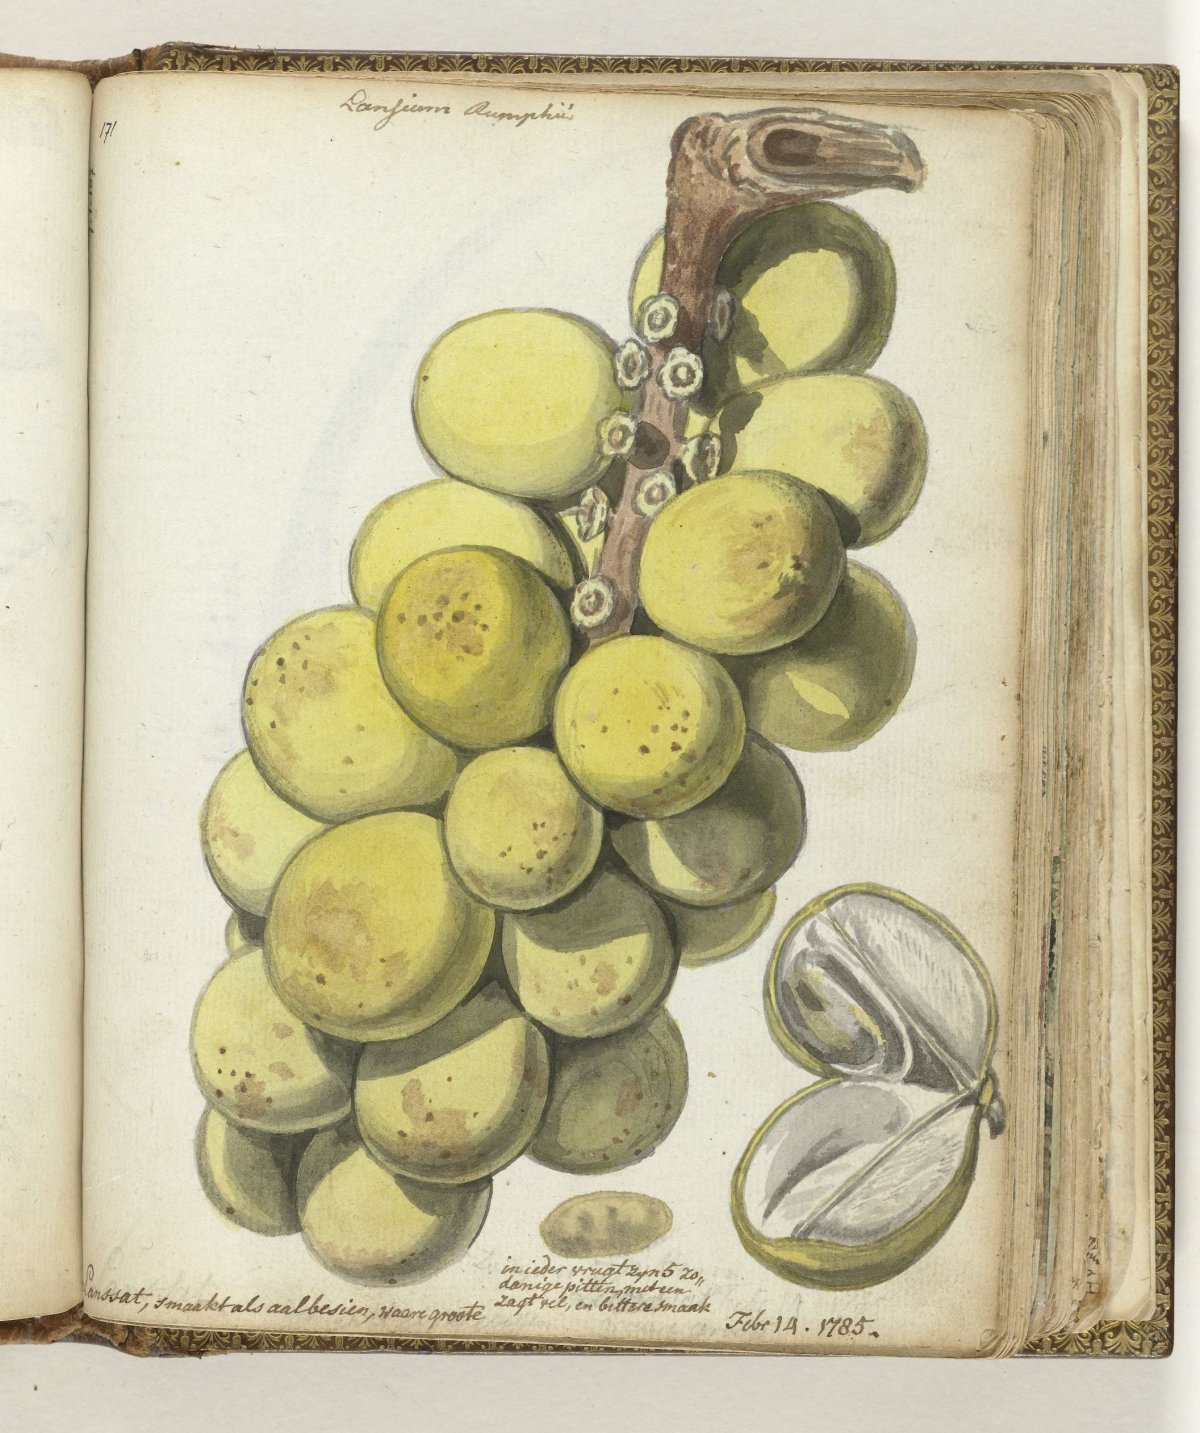 Lanssat, a Javanese fruit, Jan Brandes, 1785